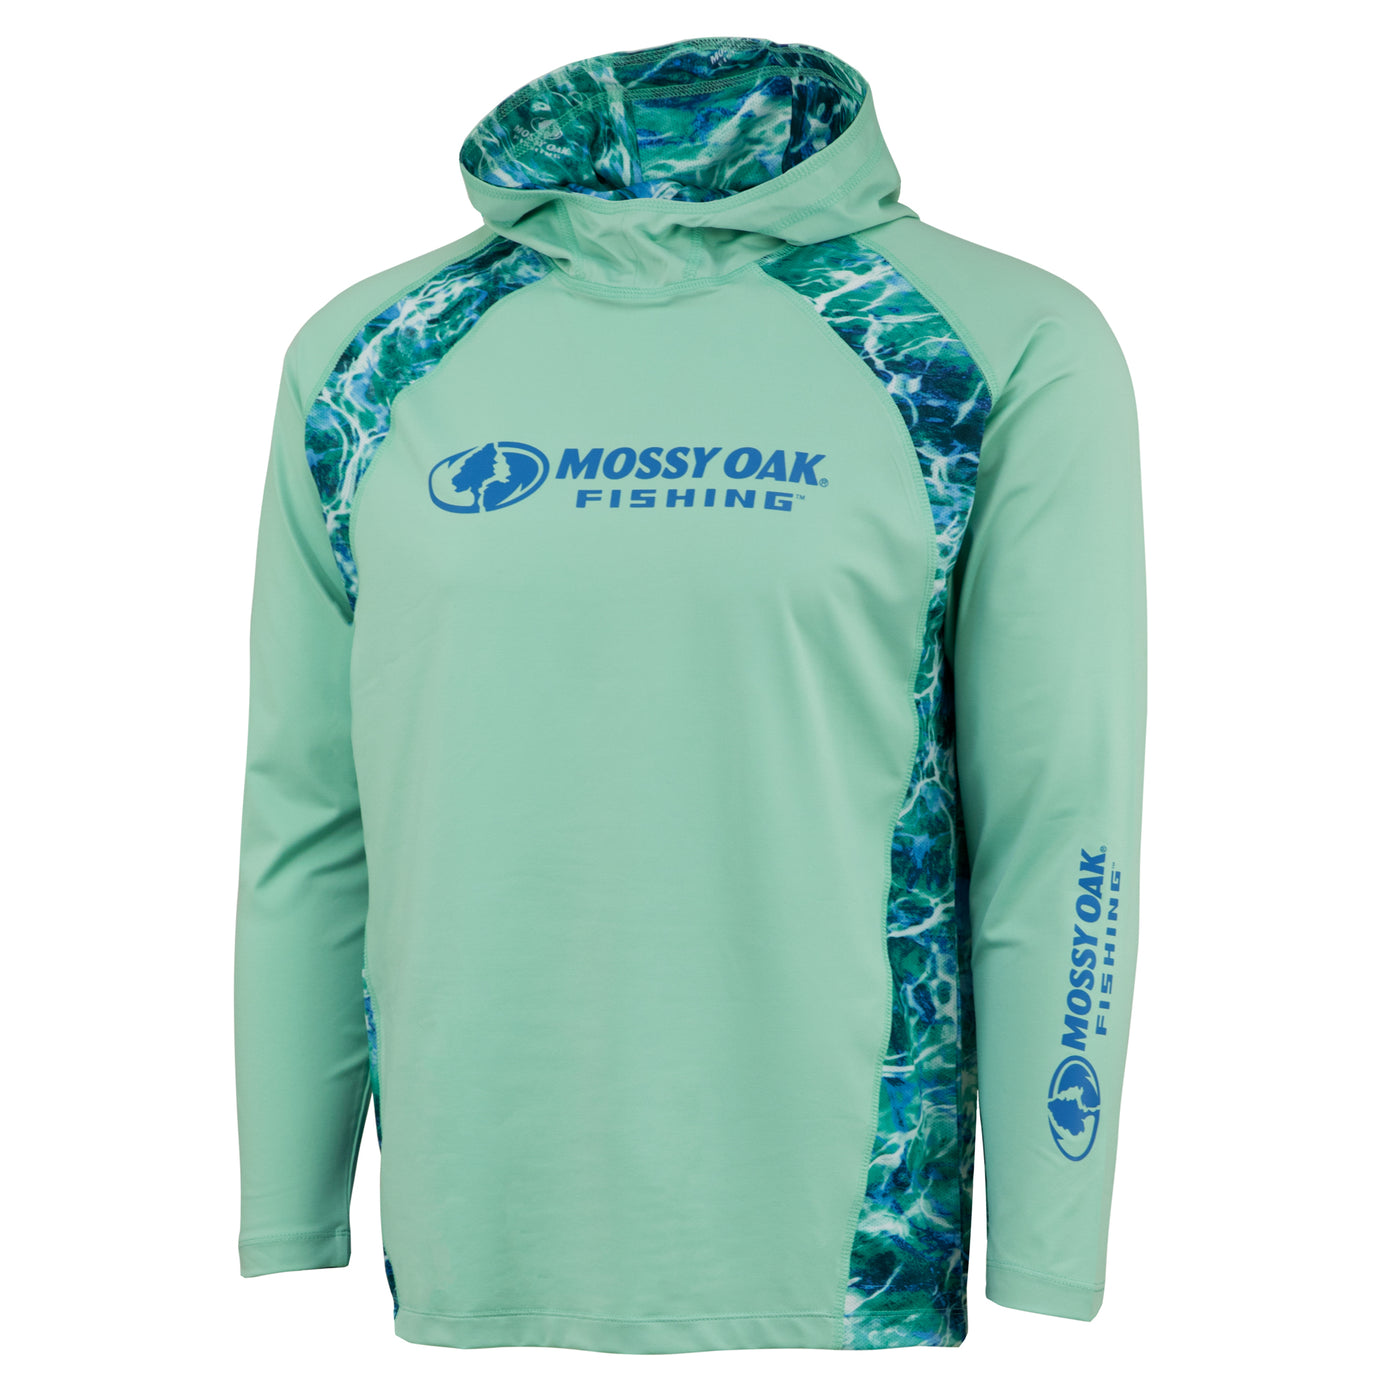 Mossy Oak Fishing Hoodie, Fishing Sweatshirts for India